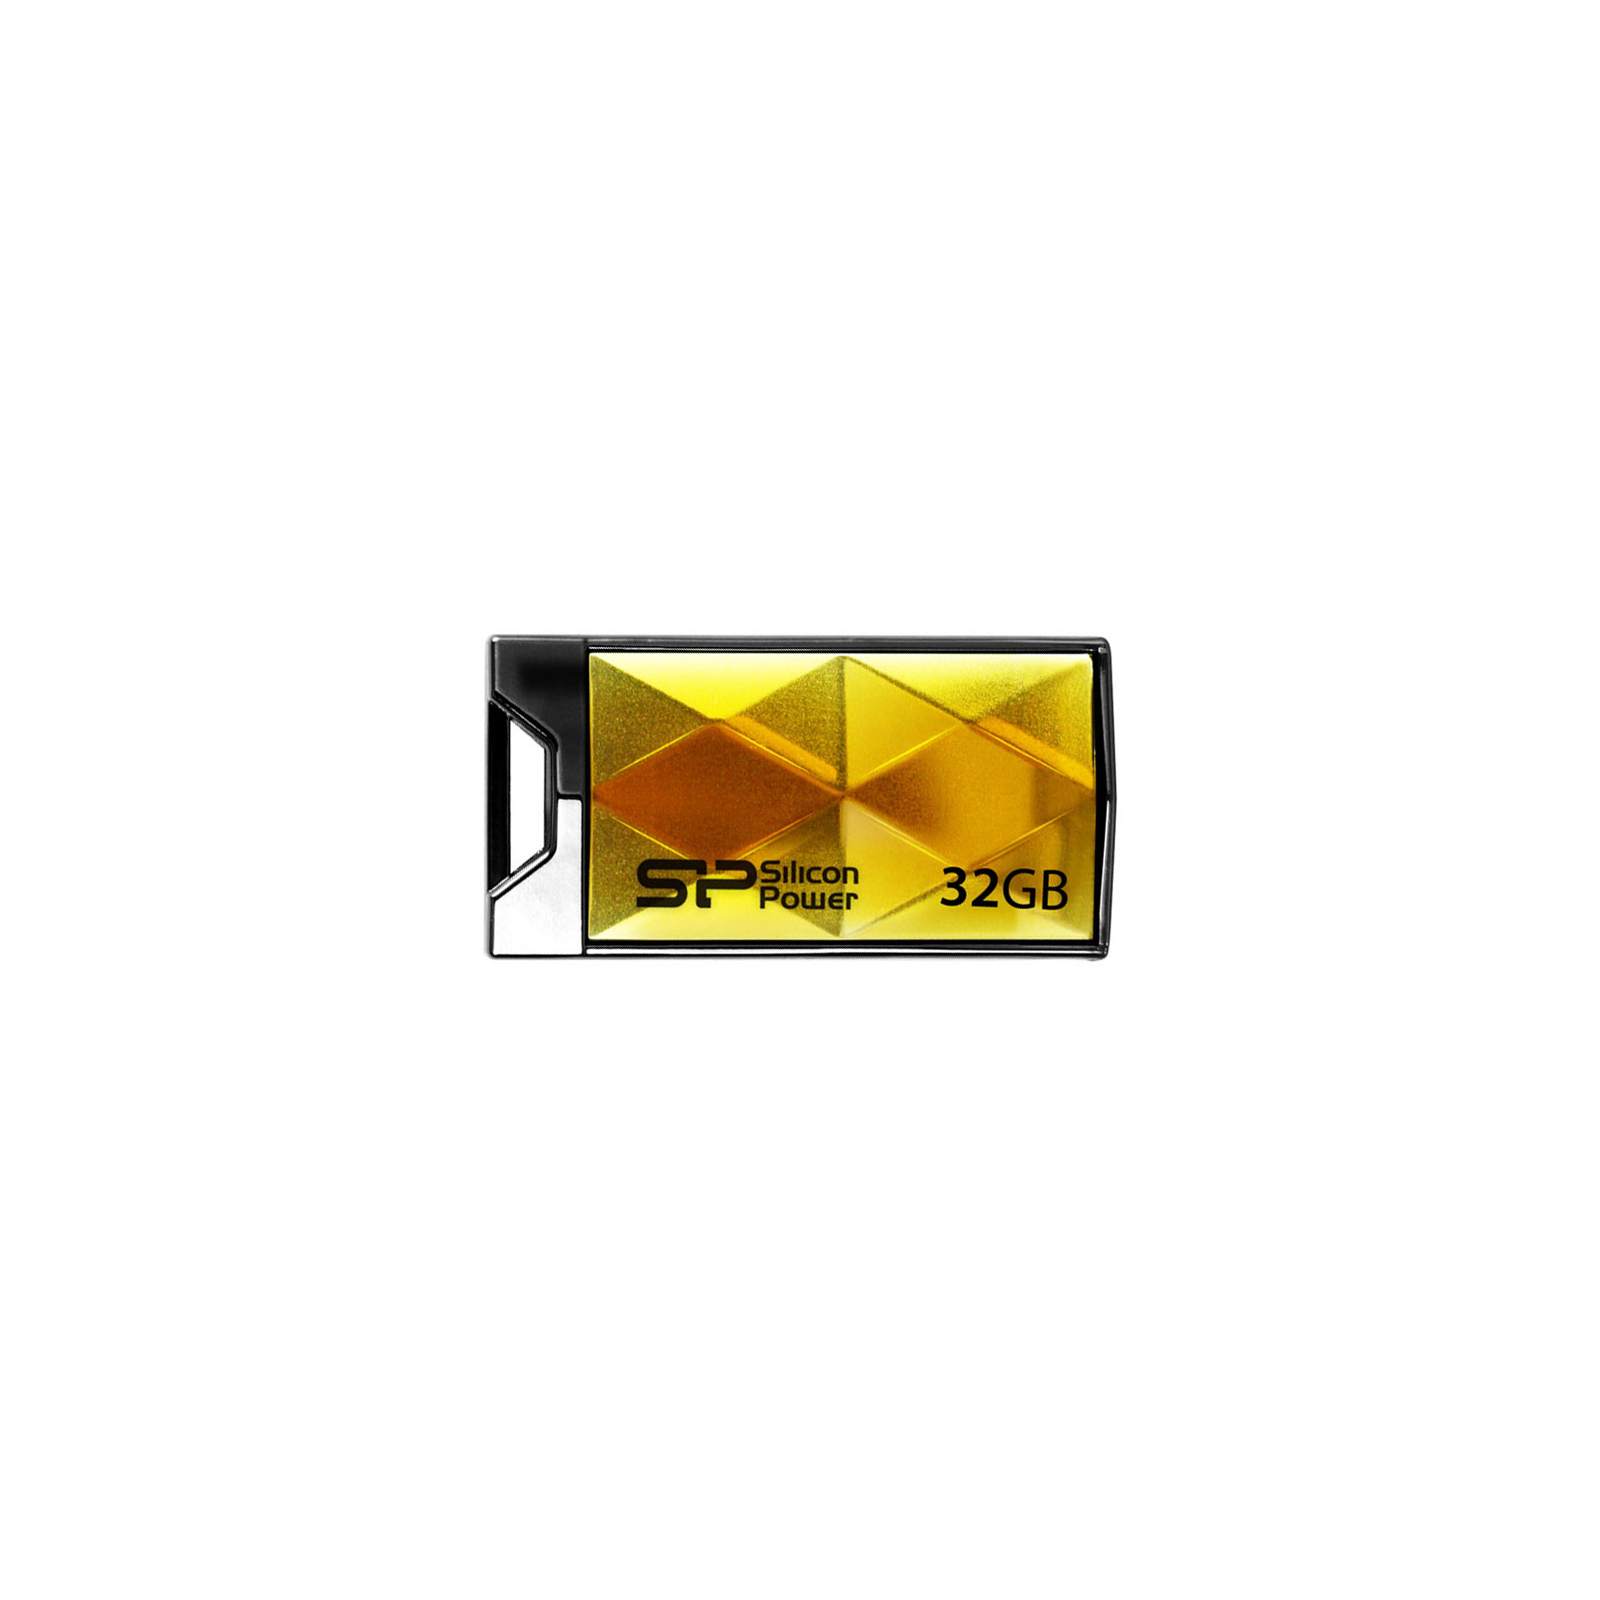 USB флеш накопитель Silicon Power 32GB Touch 850 Amber USB 2.0 (SP032GBUF2850V1A)